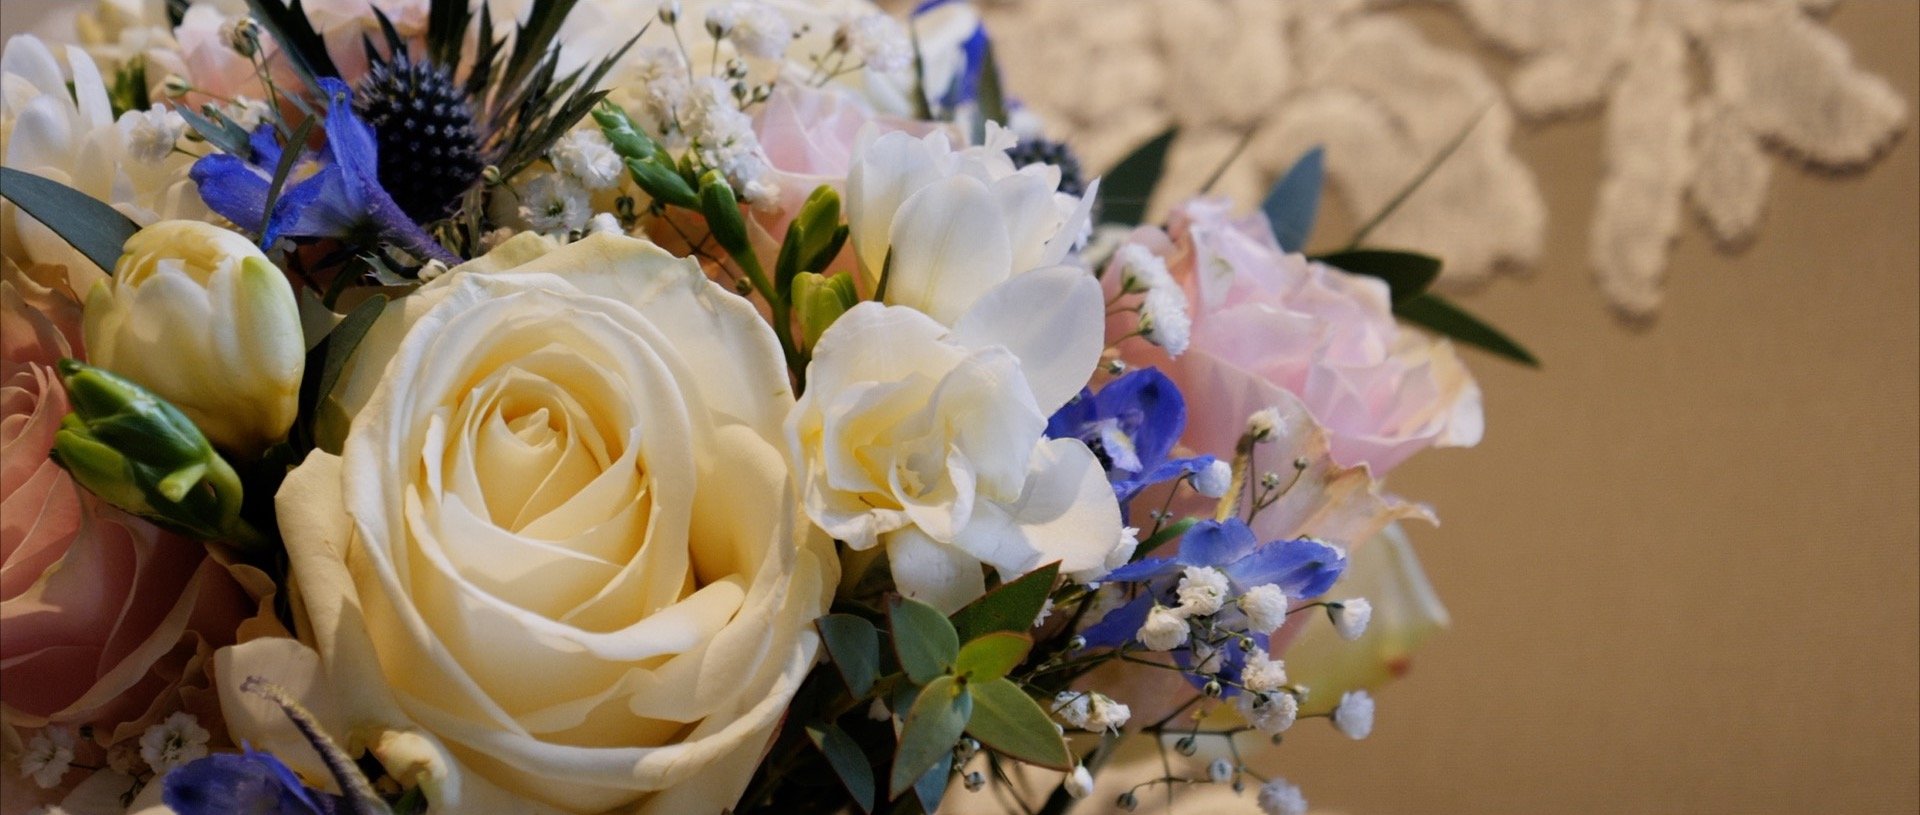 The wedding Flowers Essex videos.jpg